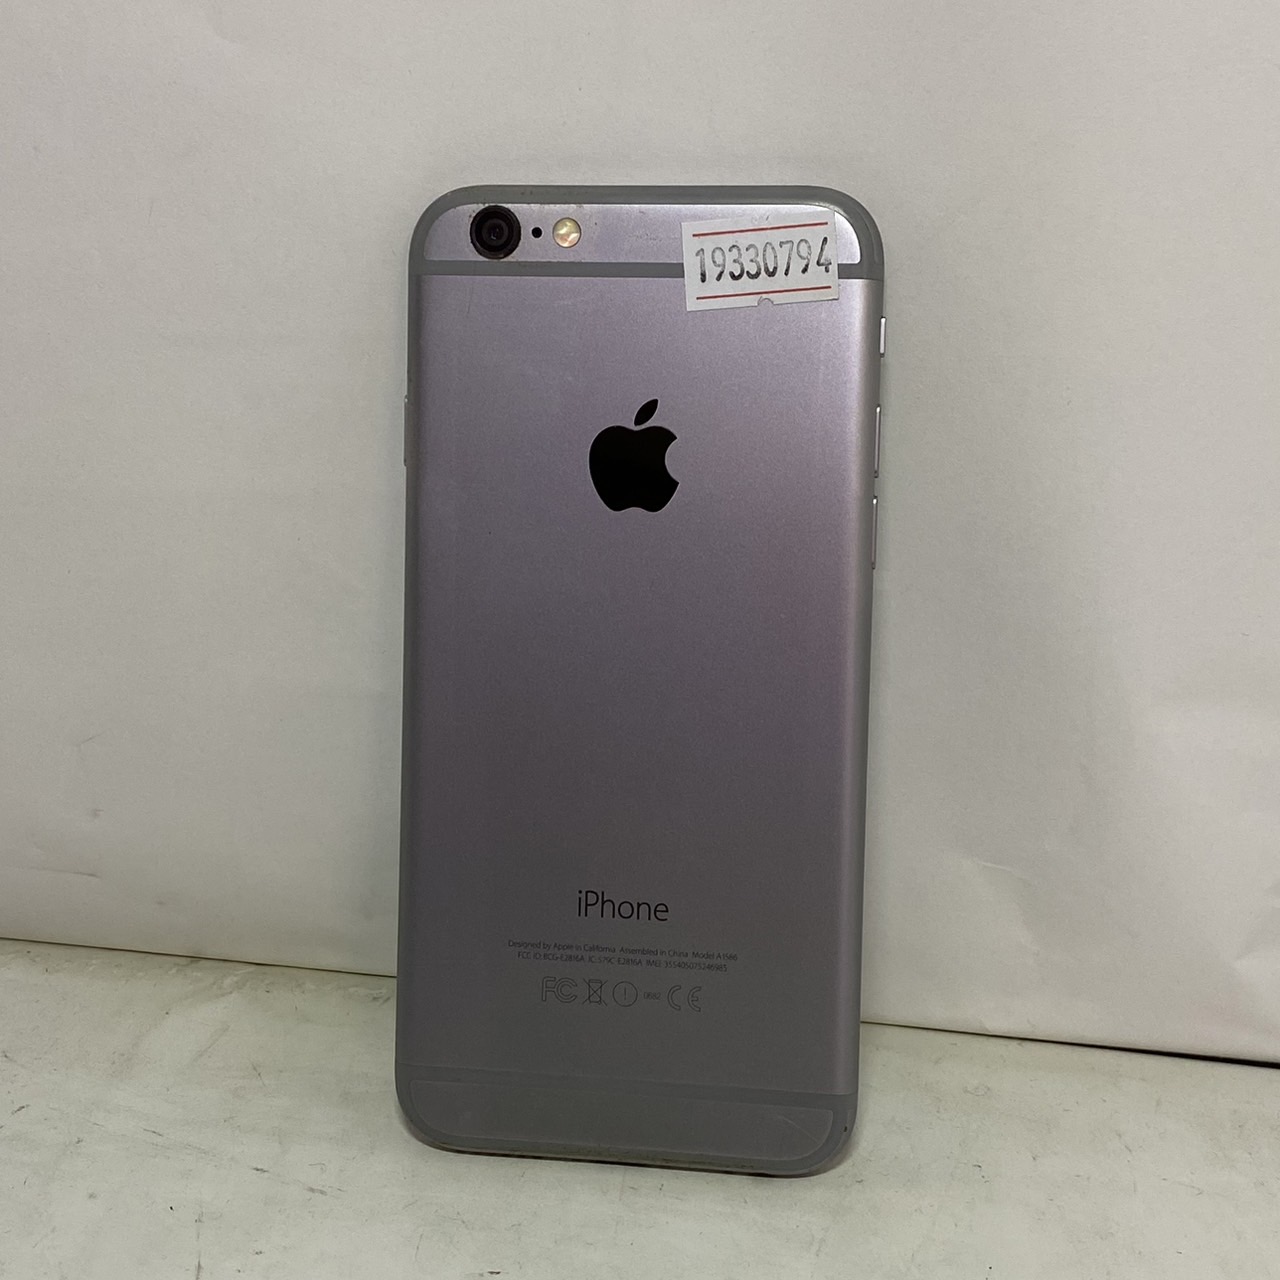 docomo(NTTドコモ) iPhone 6 16GB MG472J/A